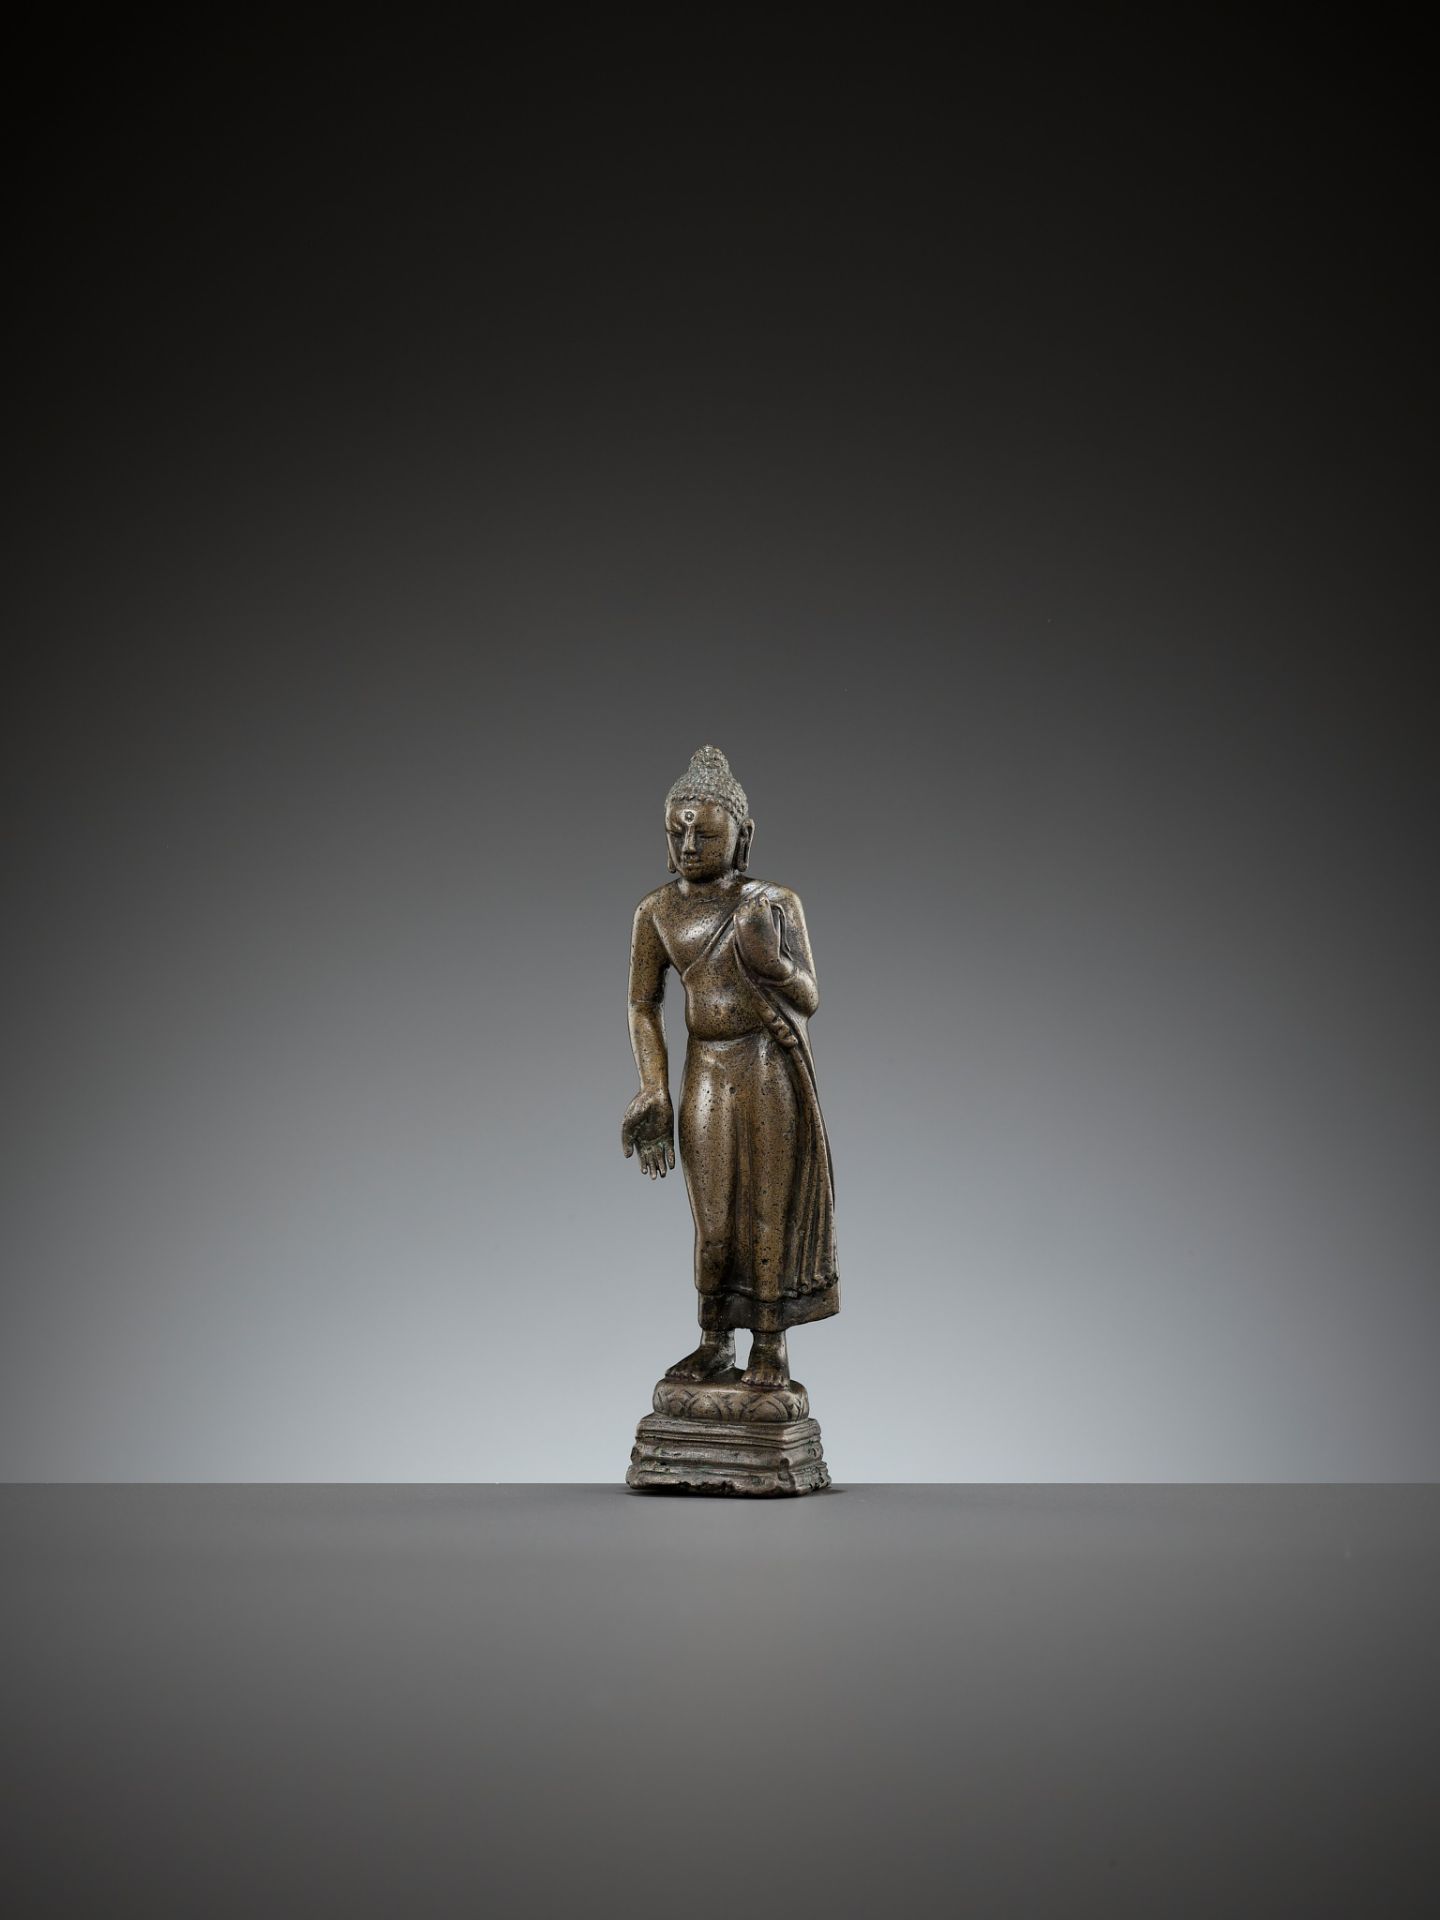 A BRONZE FIGURE OF A STANDING BUDDHA, POST-GUPTA PERIOD, INDIA, C. 7TH CENTURY - Image 7 of 15